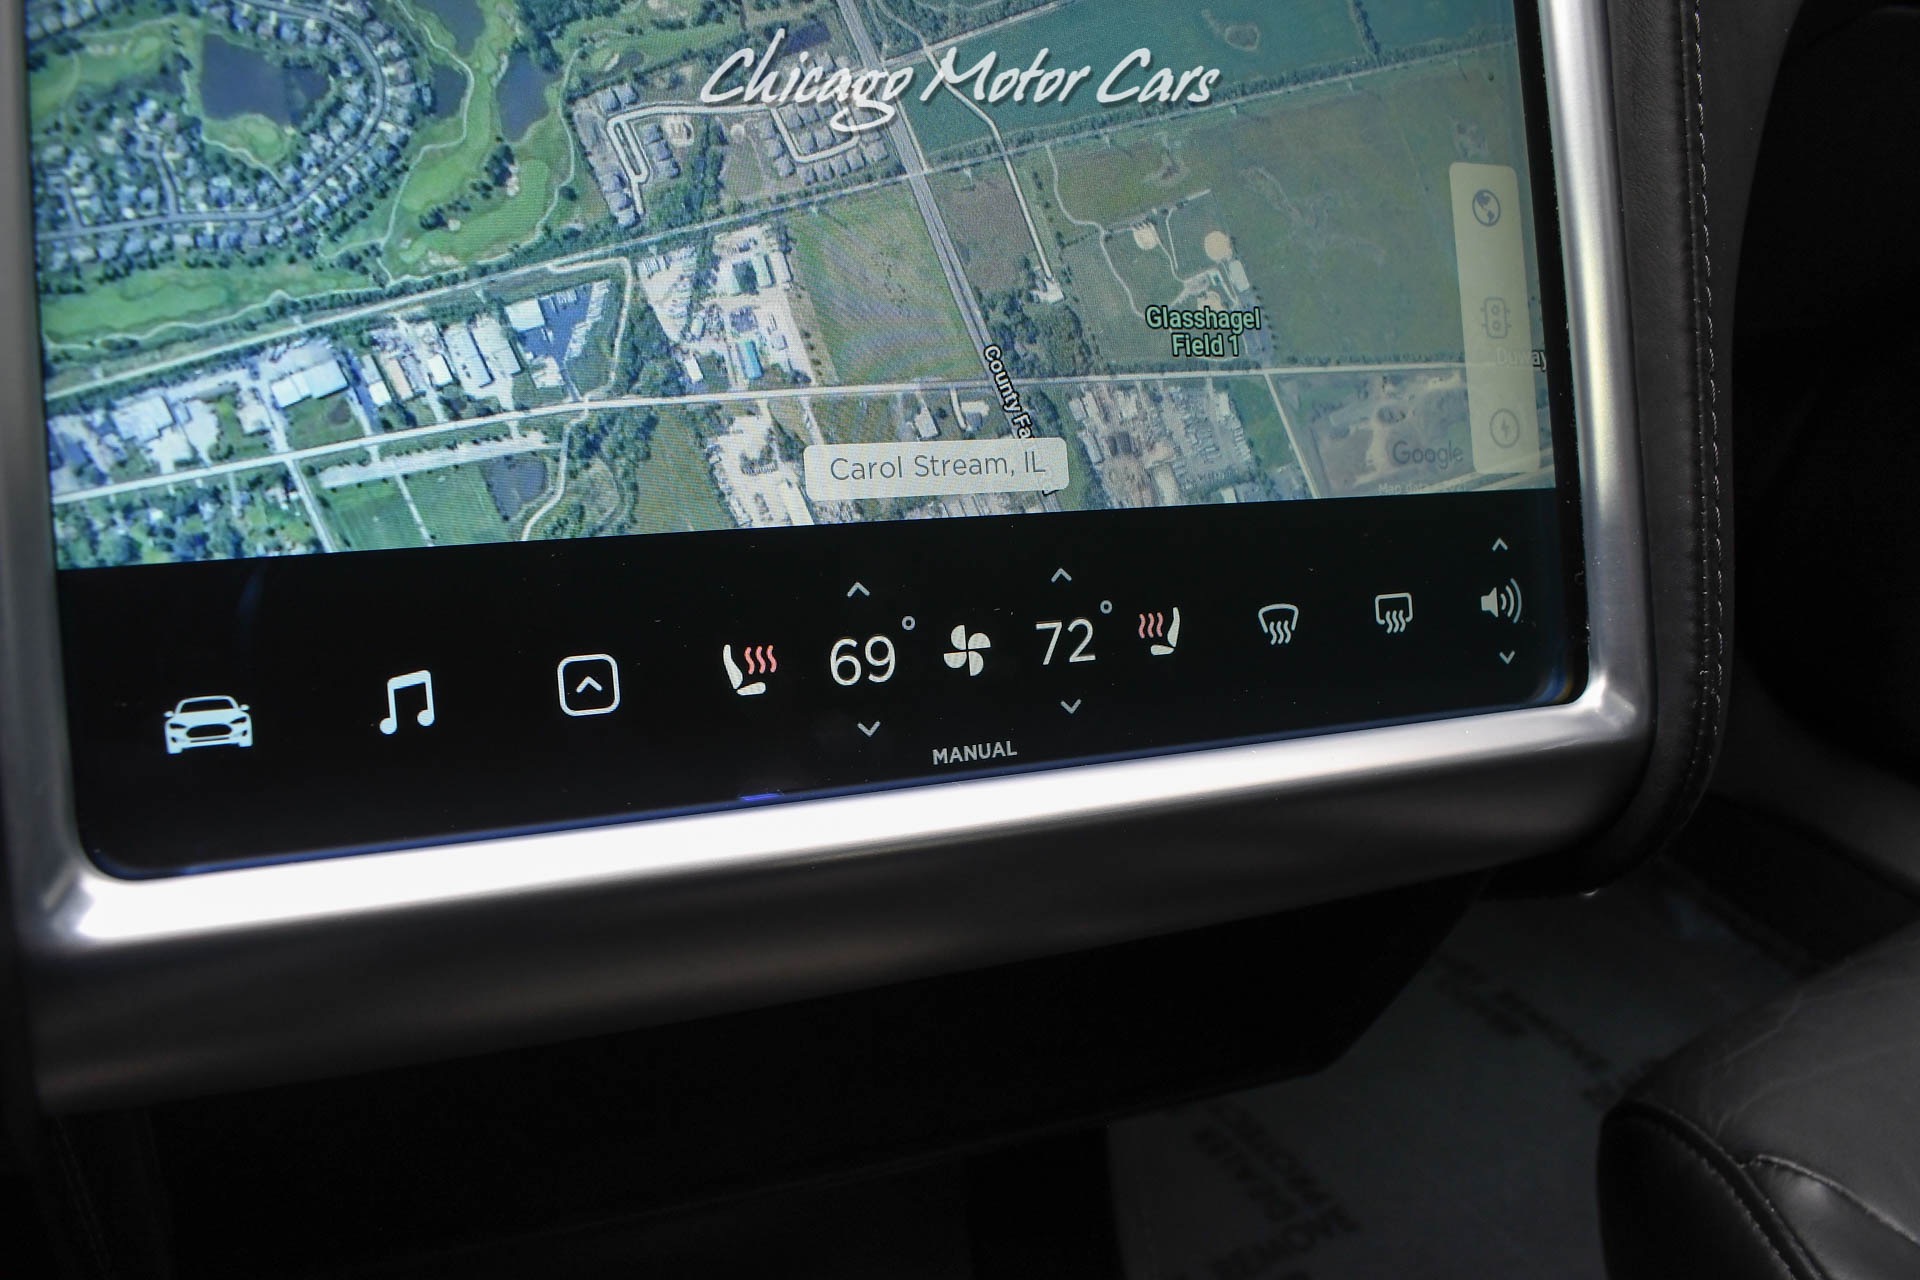 Used-2015-Tesla-Model-S-P85D-Sedan-MSRP-129200-Autopilot-Carbon-Fiber-Premium-Interior-Superchar